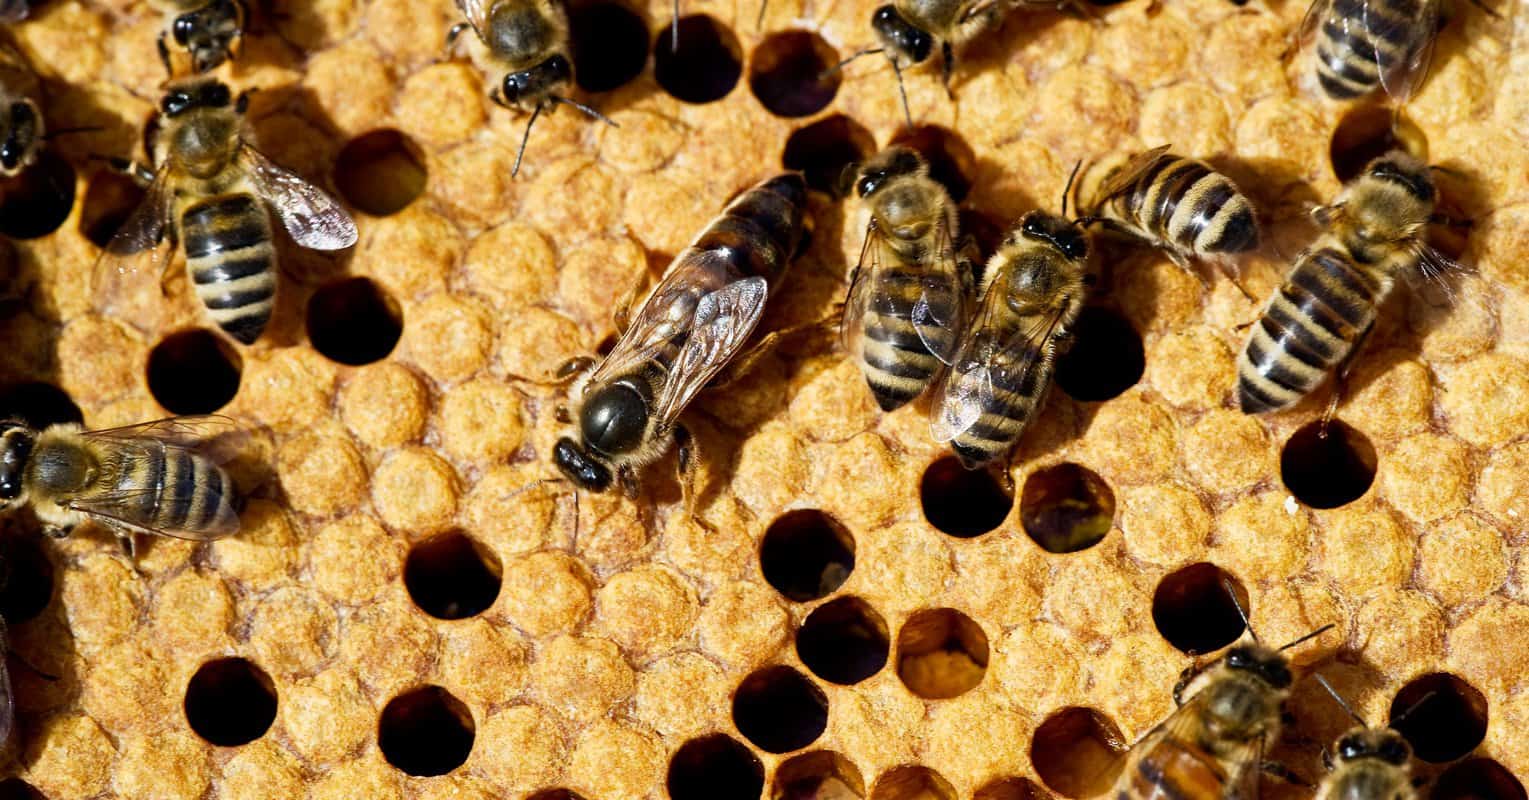 Risks Of Using Bee Away Spray